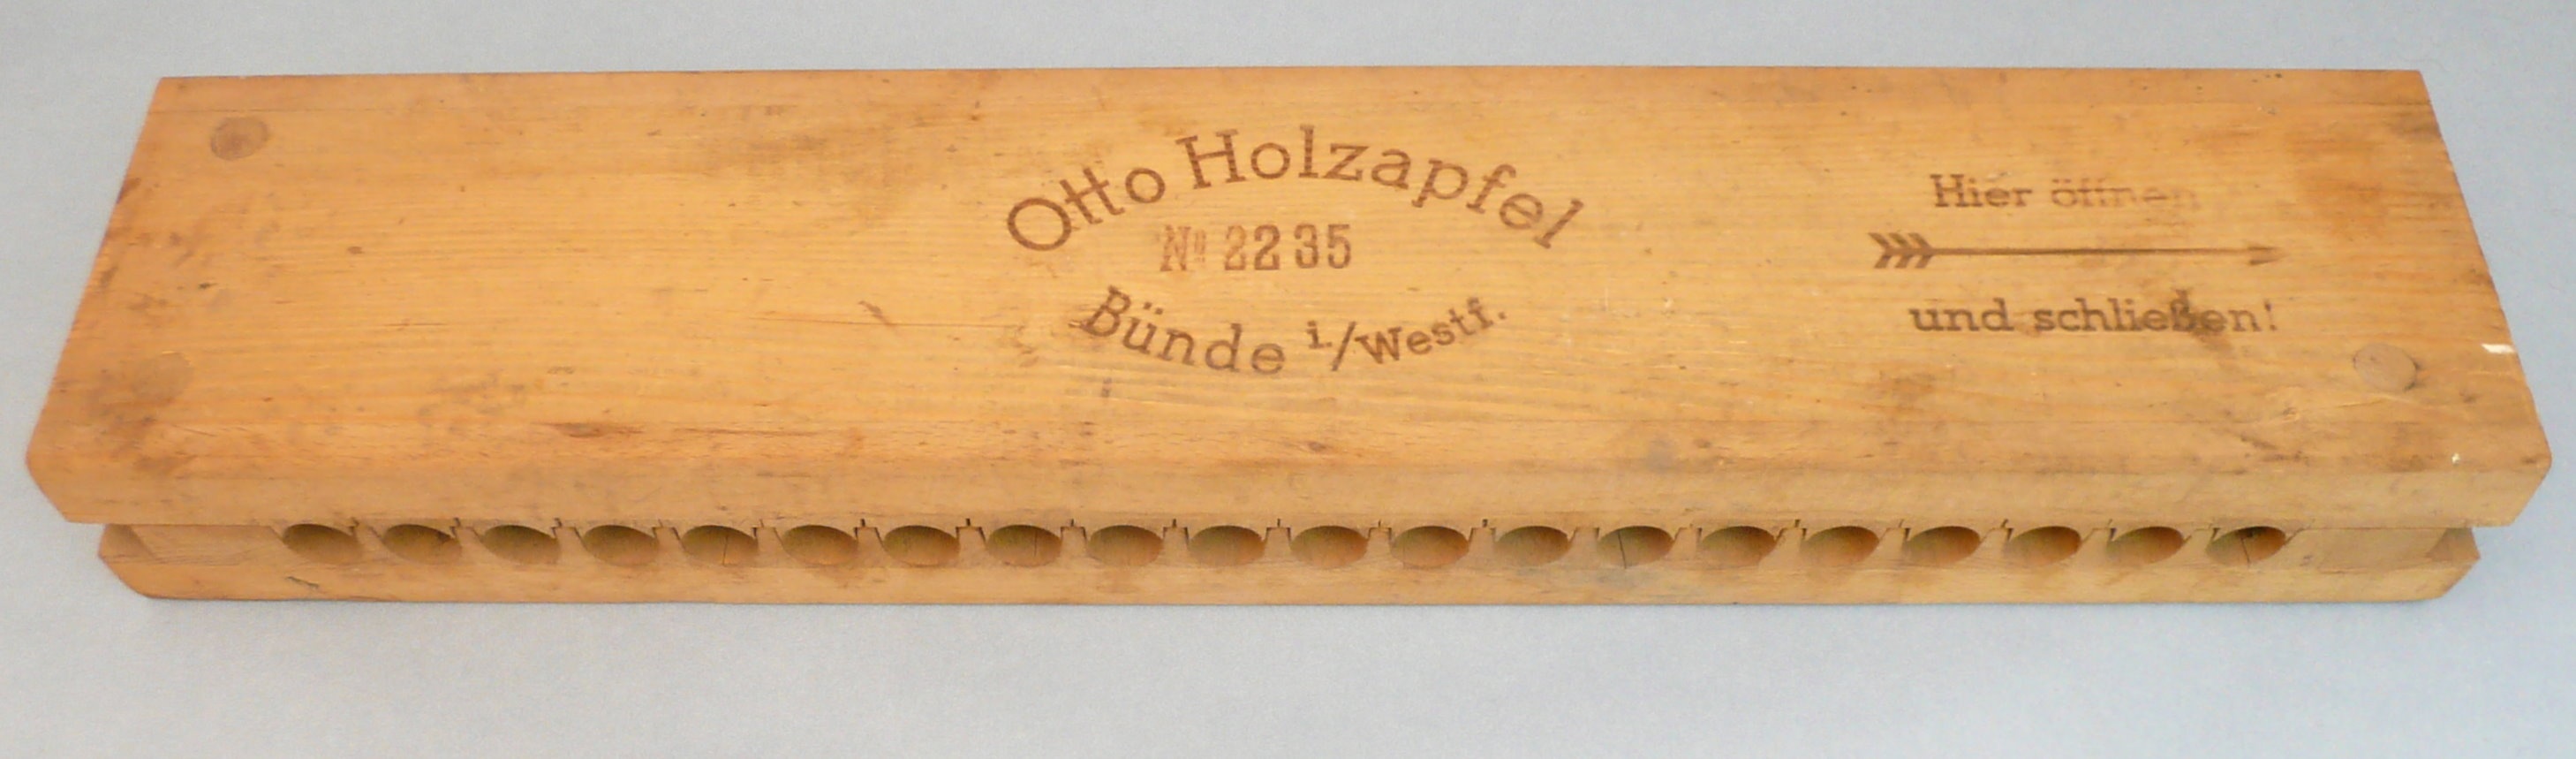 Zigarrenform - Objekt im Fokus September & Oktober 2015 (Mindener Museum CC BY-NC-SA)